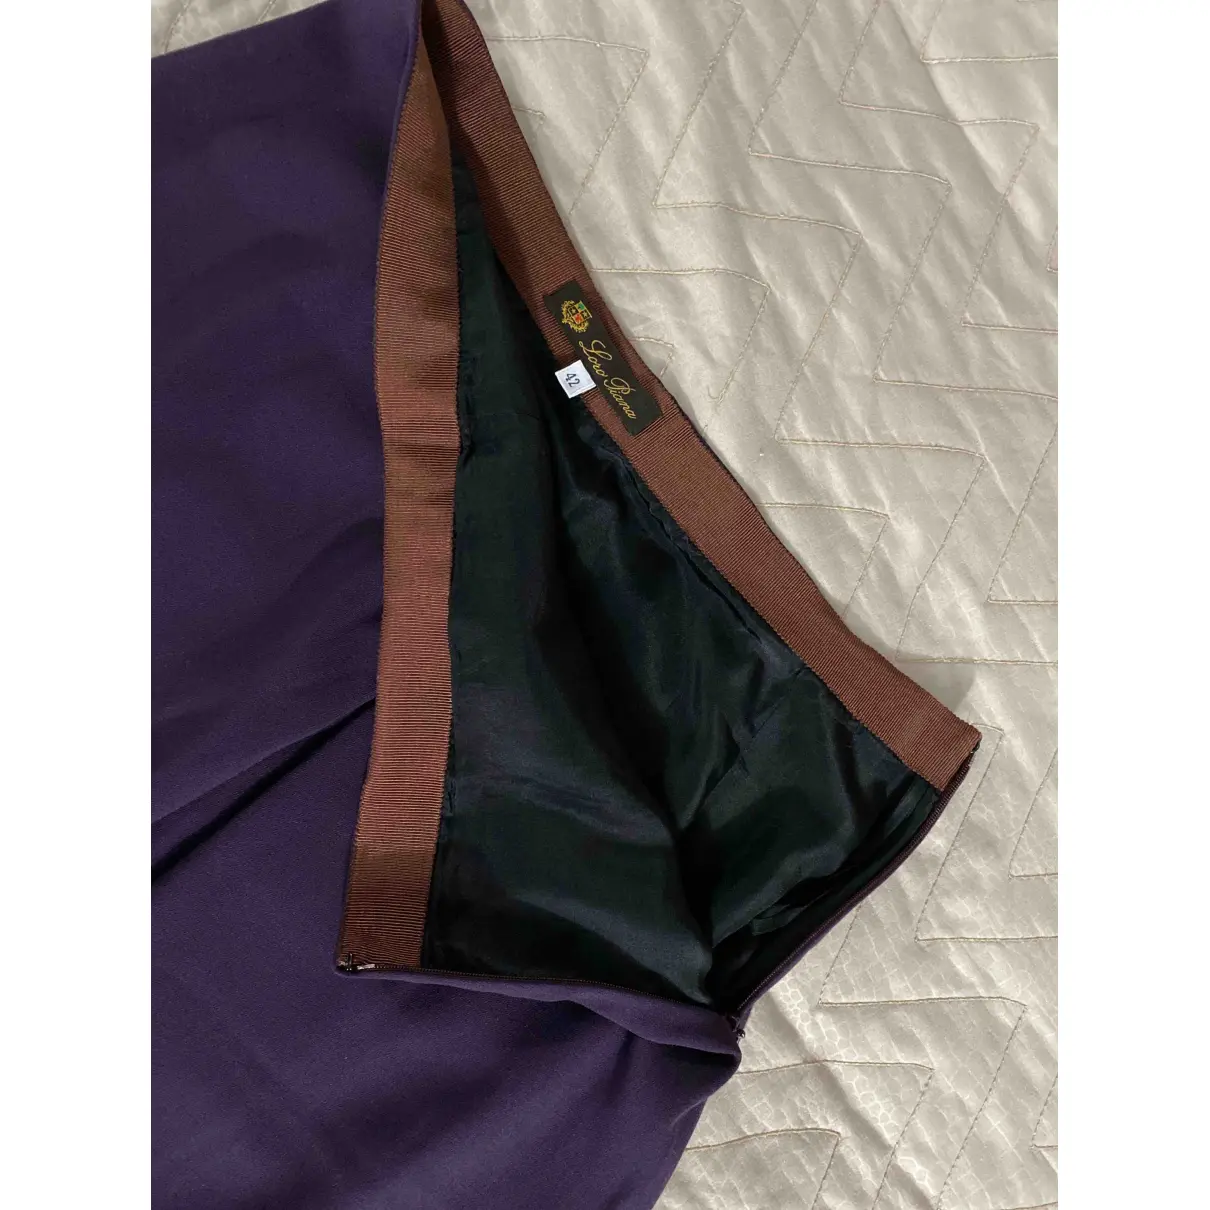 Buy Loro Piana Wool mid-length skirt online